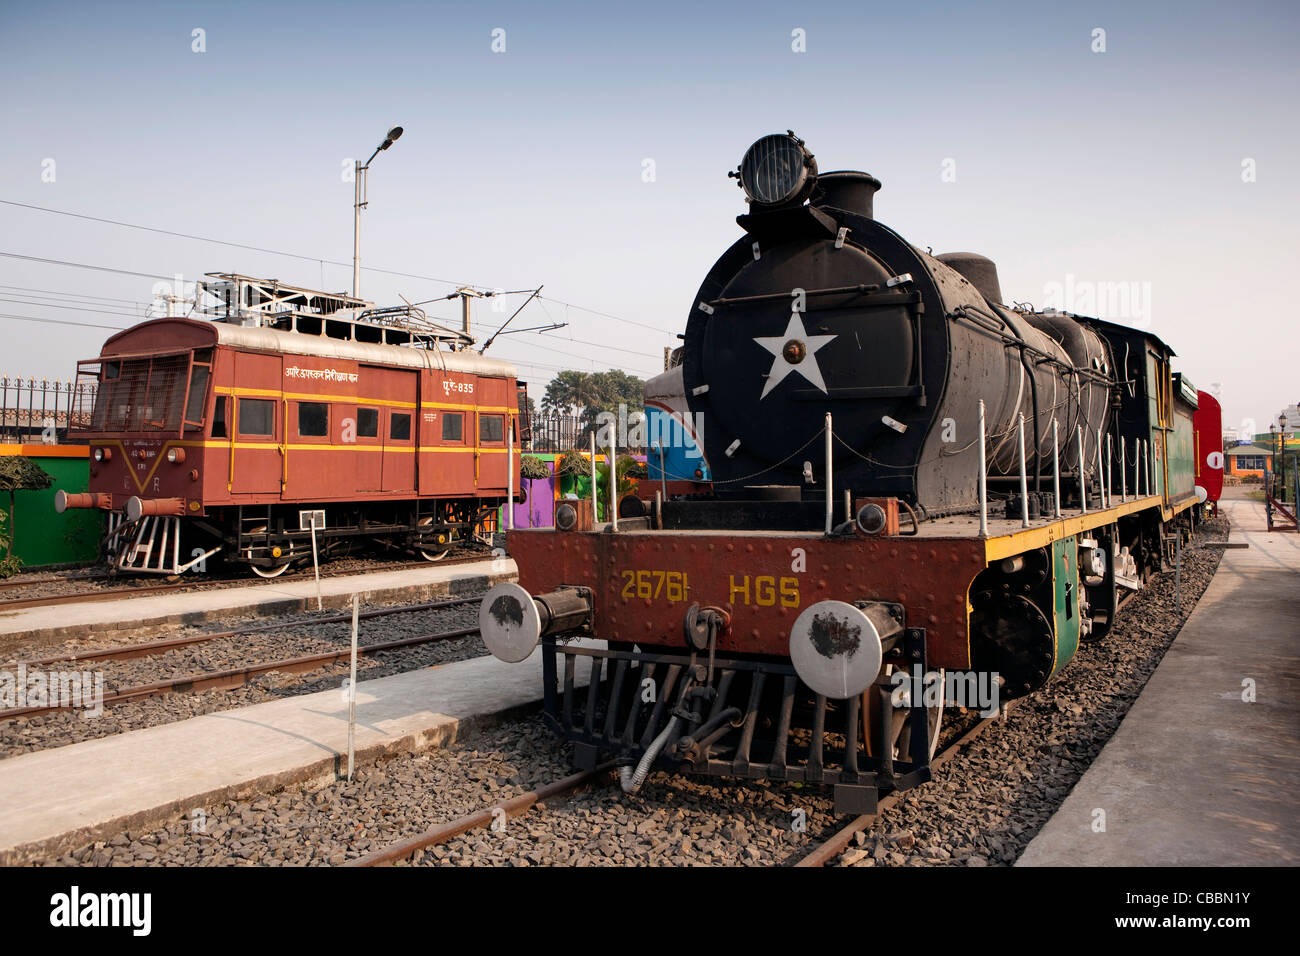 India, West Bengal, Kolkata, Howrah, Calcutta Railway Museum, preserved steam locomotive on display Stock Photo